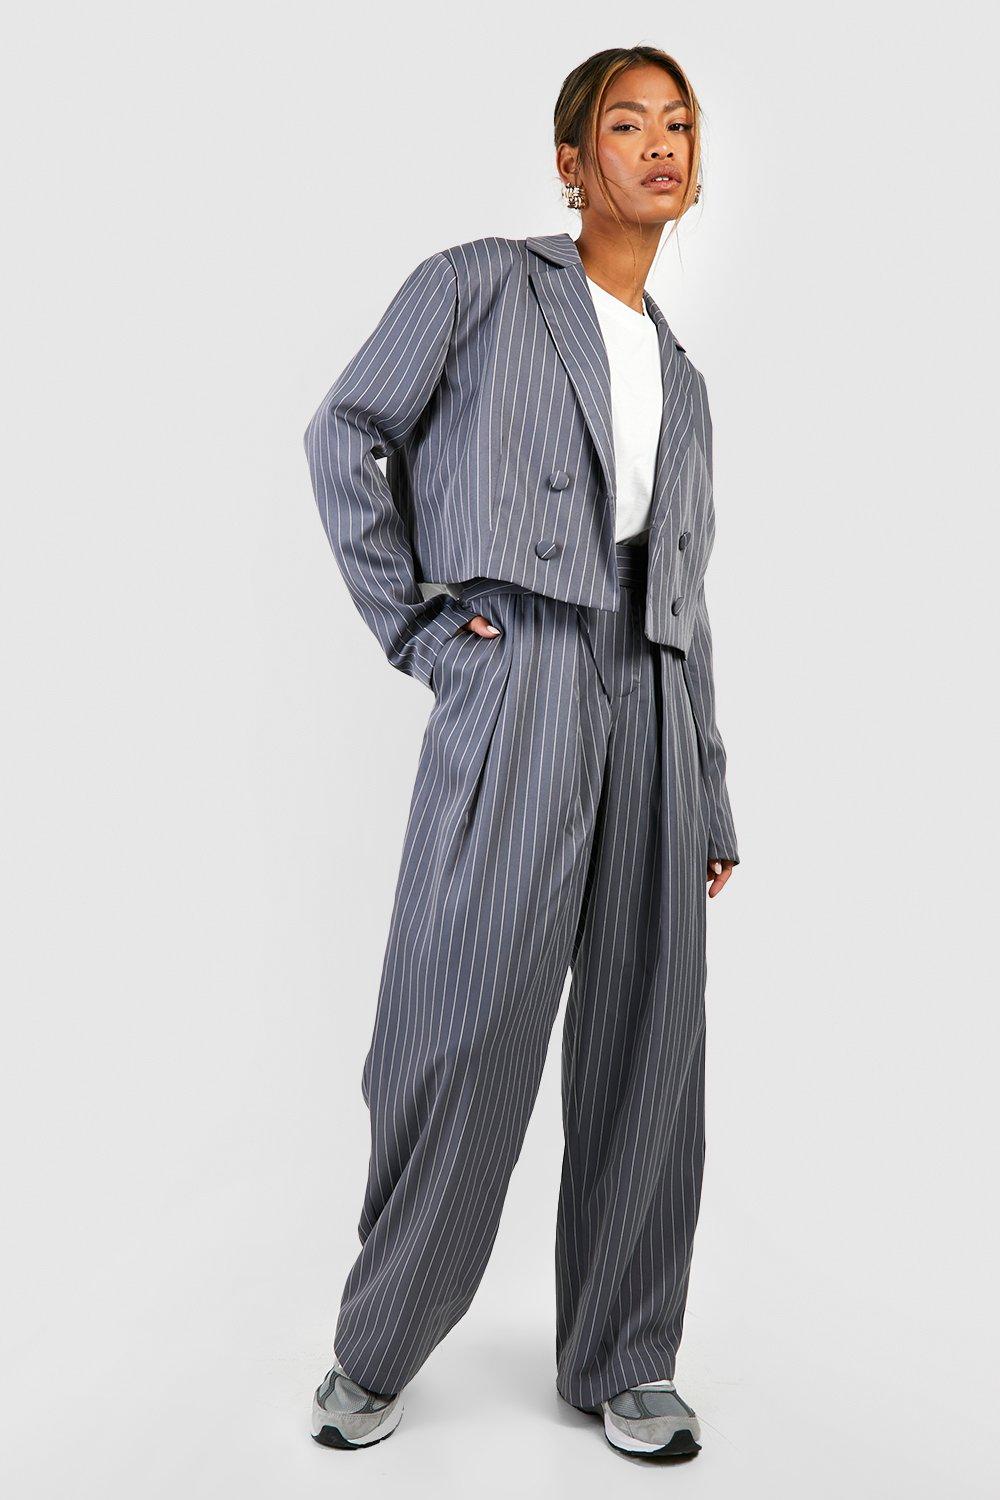 Tillys RSQ Womens Pinstripe Pants - BLK/WHT